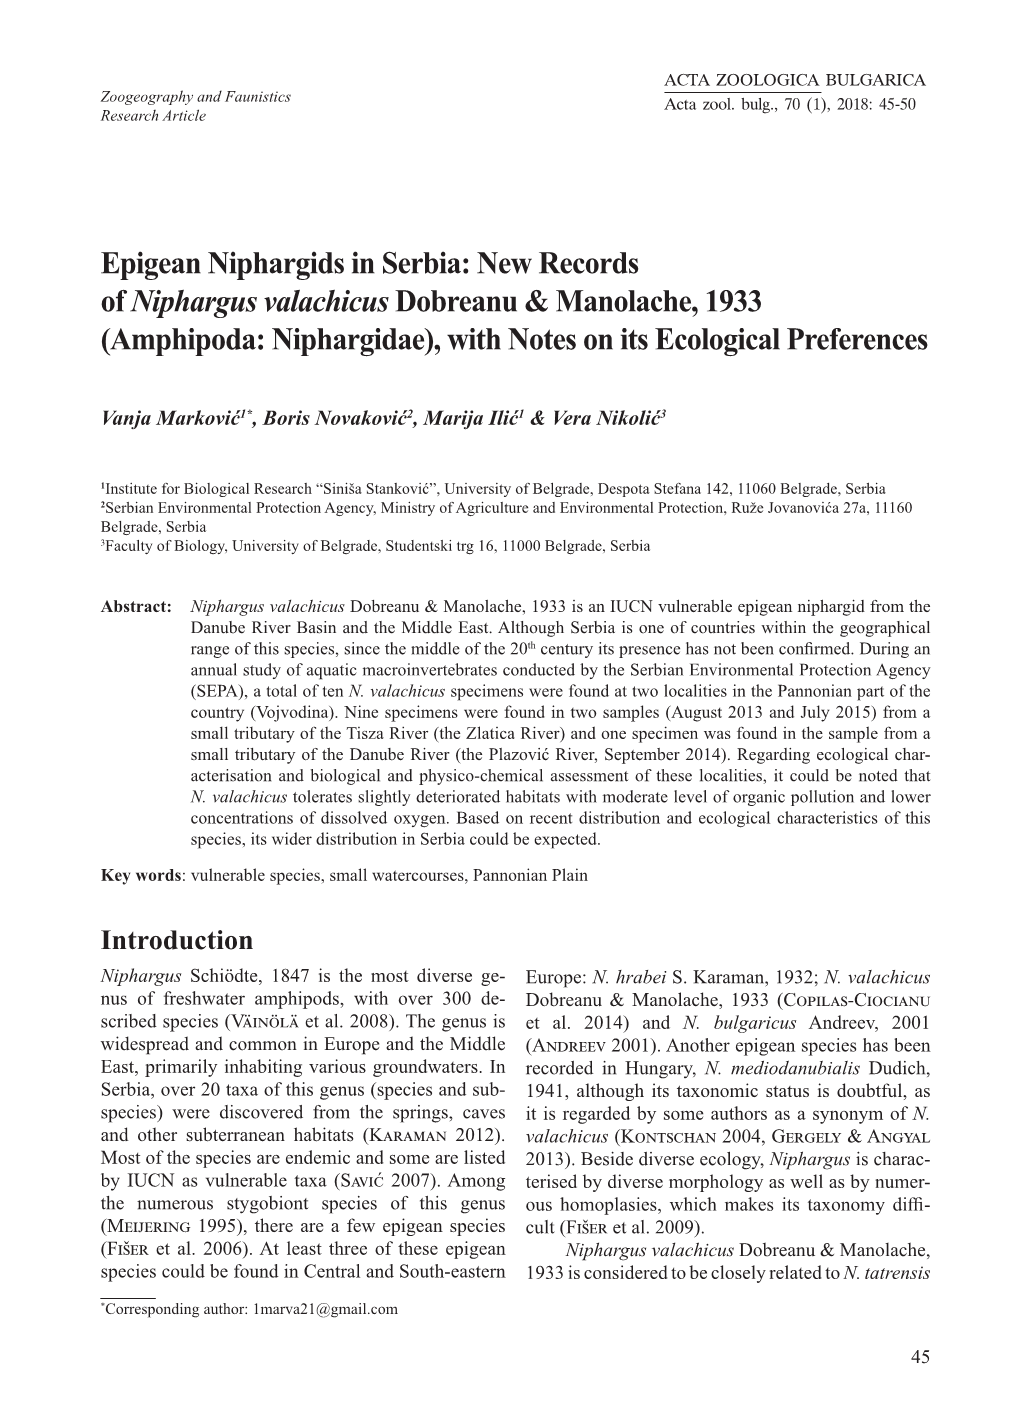 New Records of Niphargus Valachicus Dobreanu & Manolache